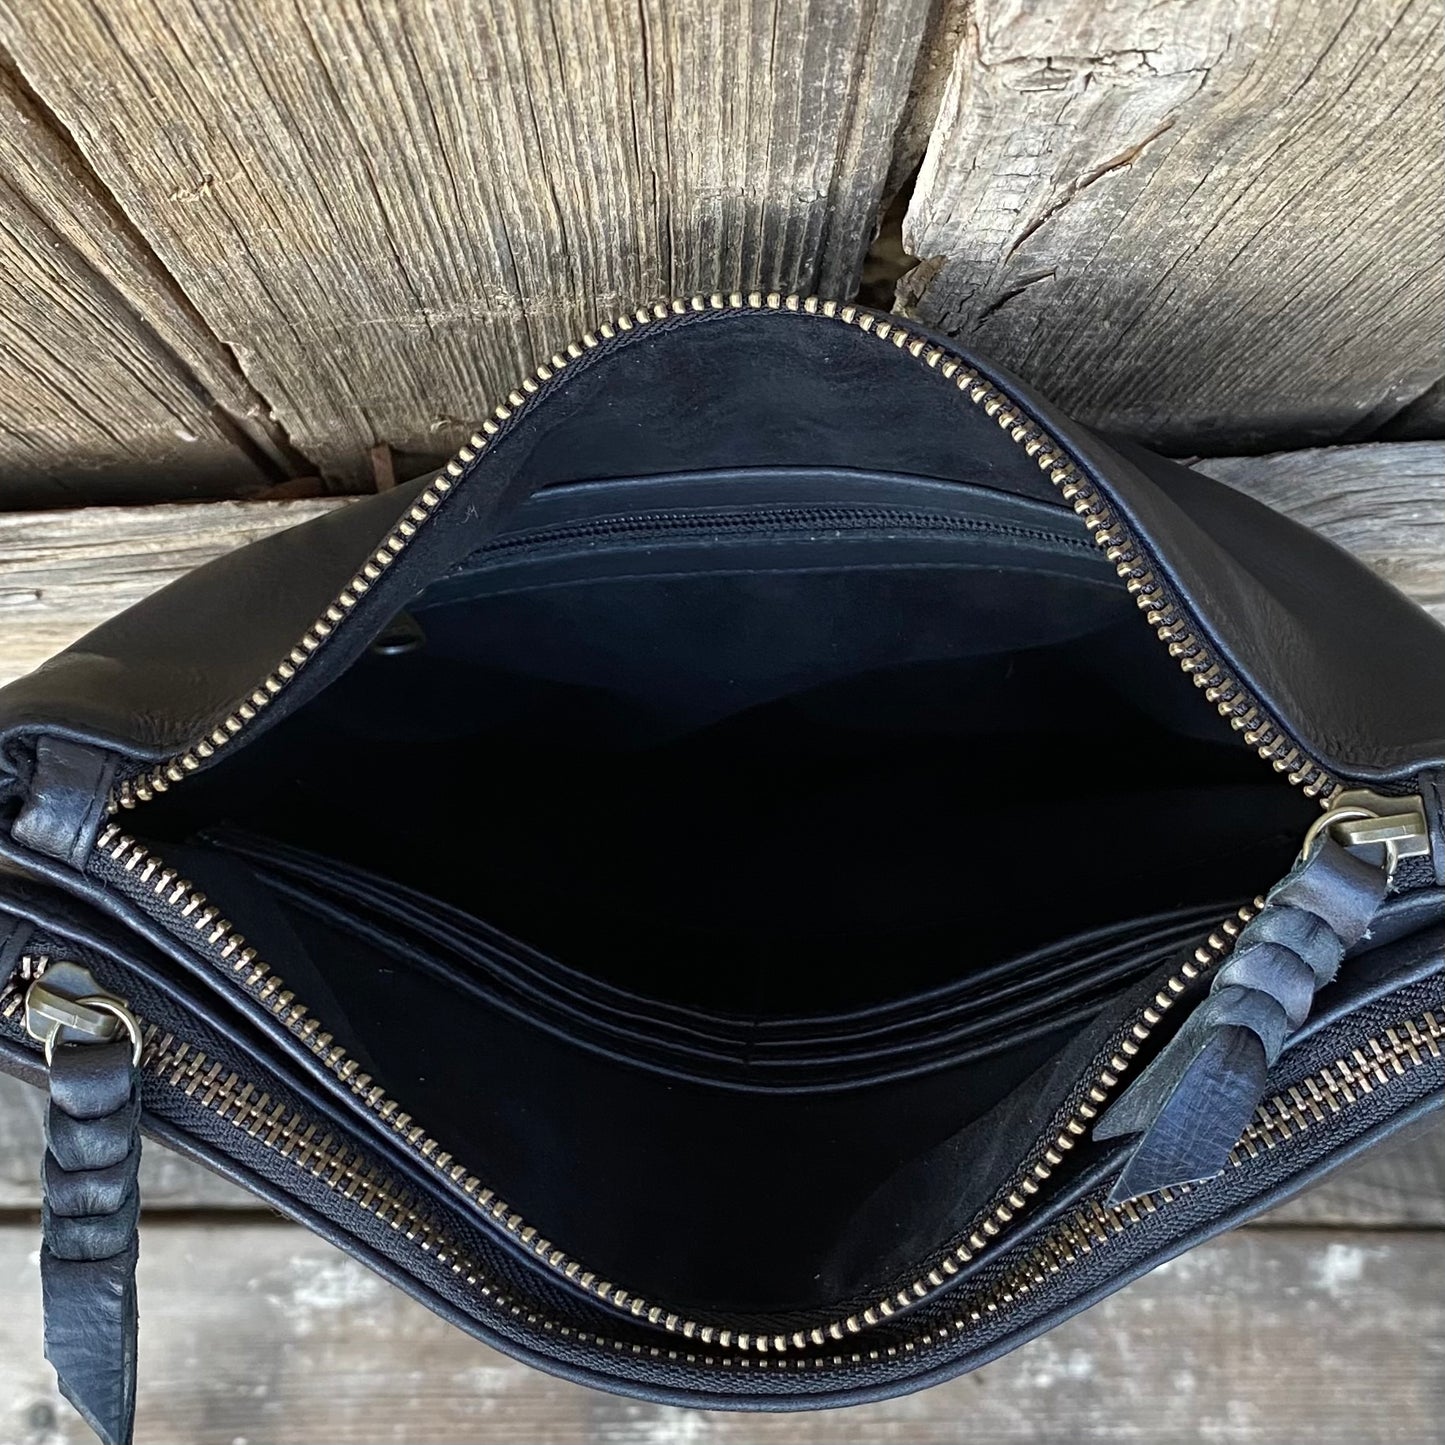 Sally Double Compartment Leather Handbag/Travel Bag